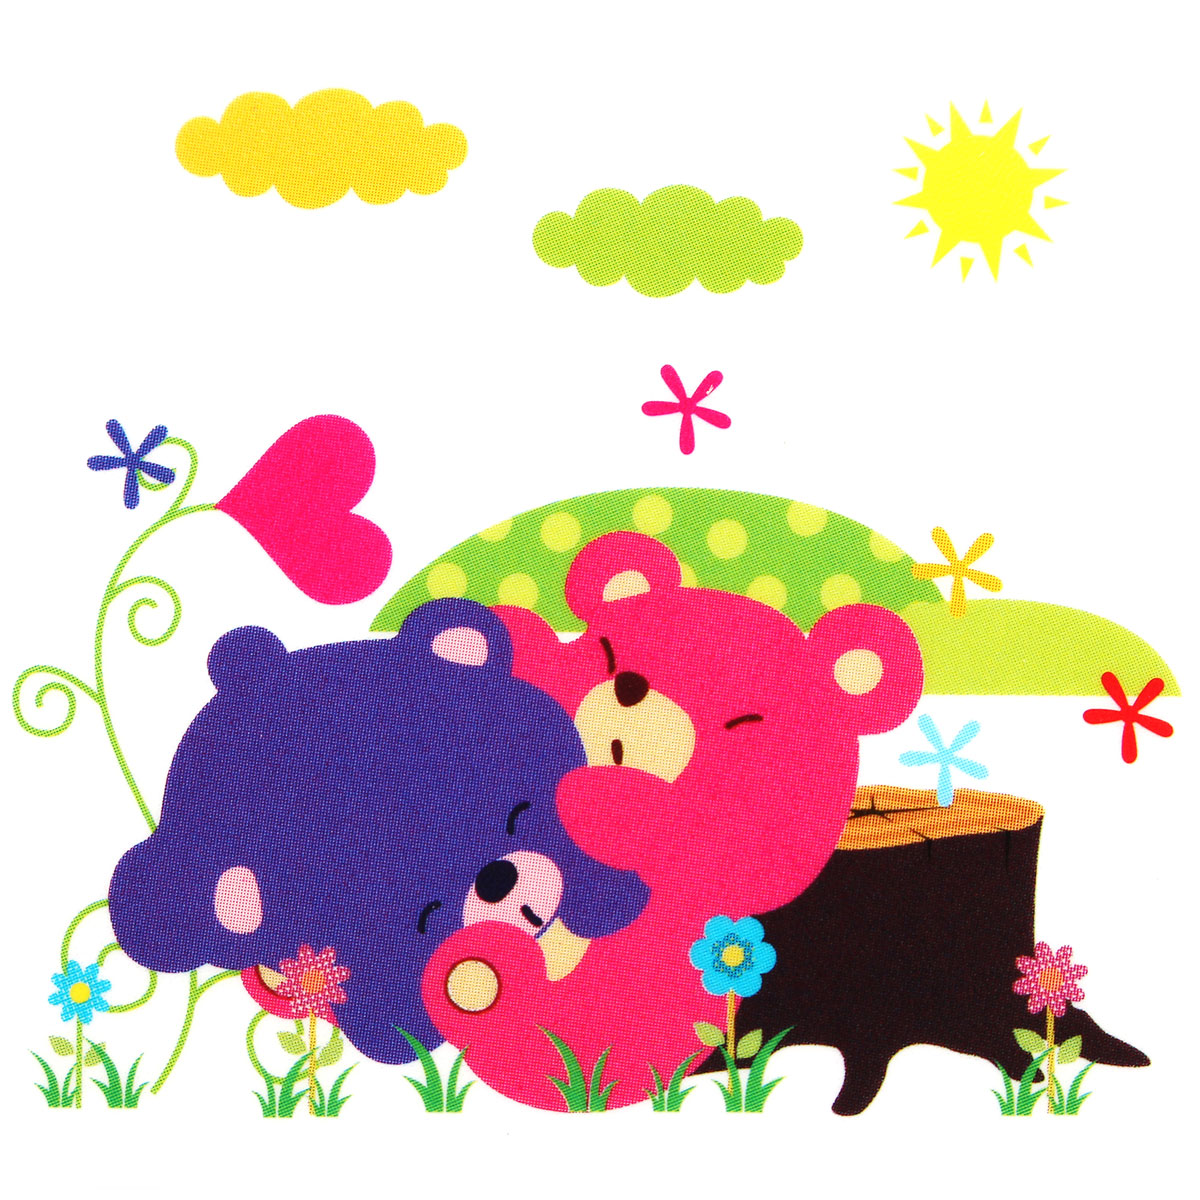 Baby-Kids-Room-Cute-Cartoon-Jungle-Animals-DIY-Removable-Wall-Sticker-Decal-Kid-Nursery-Home-Art-Dec-1016350